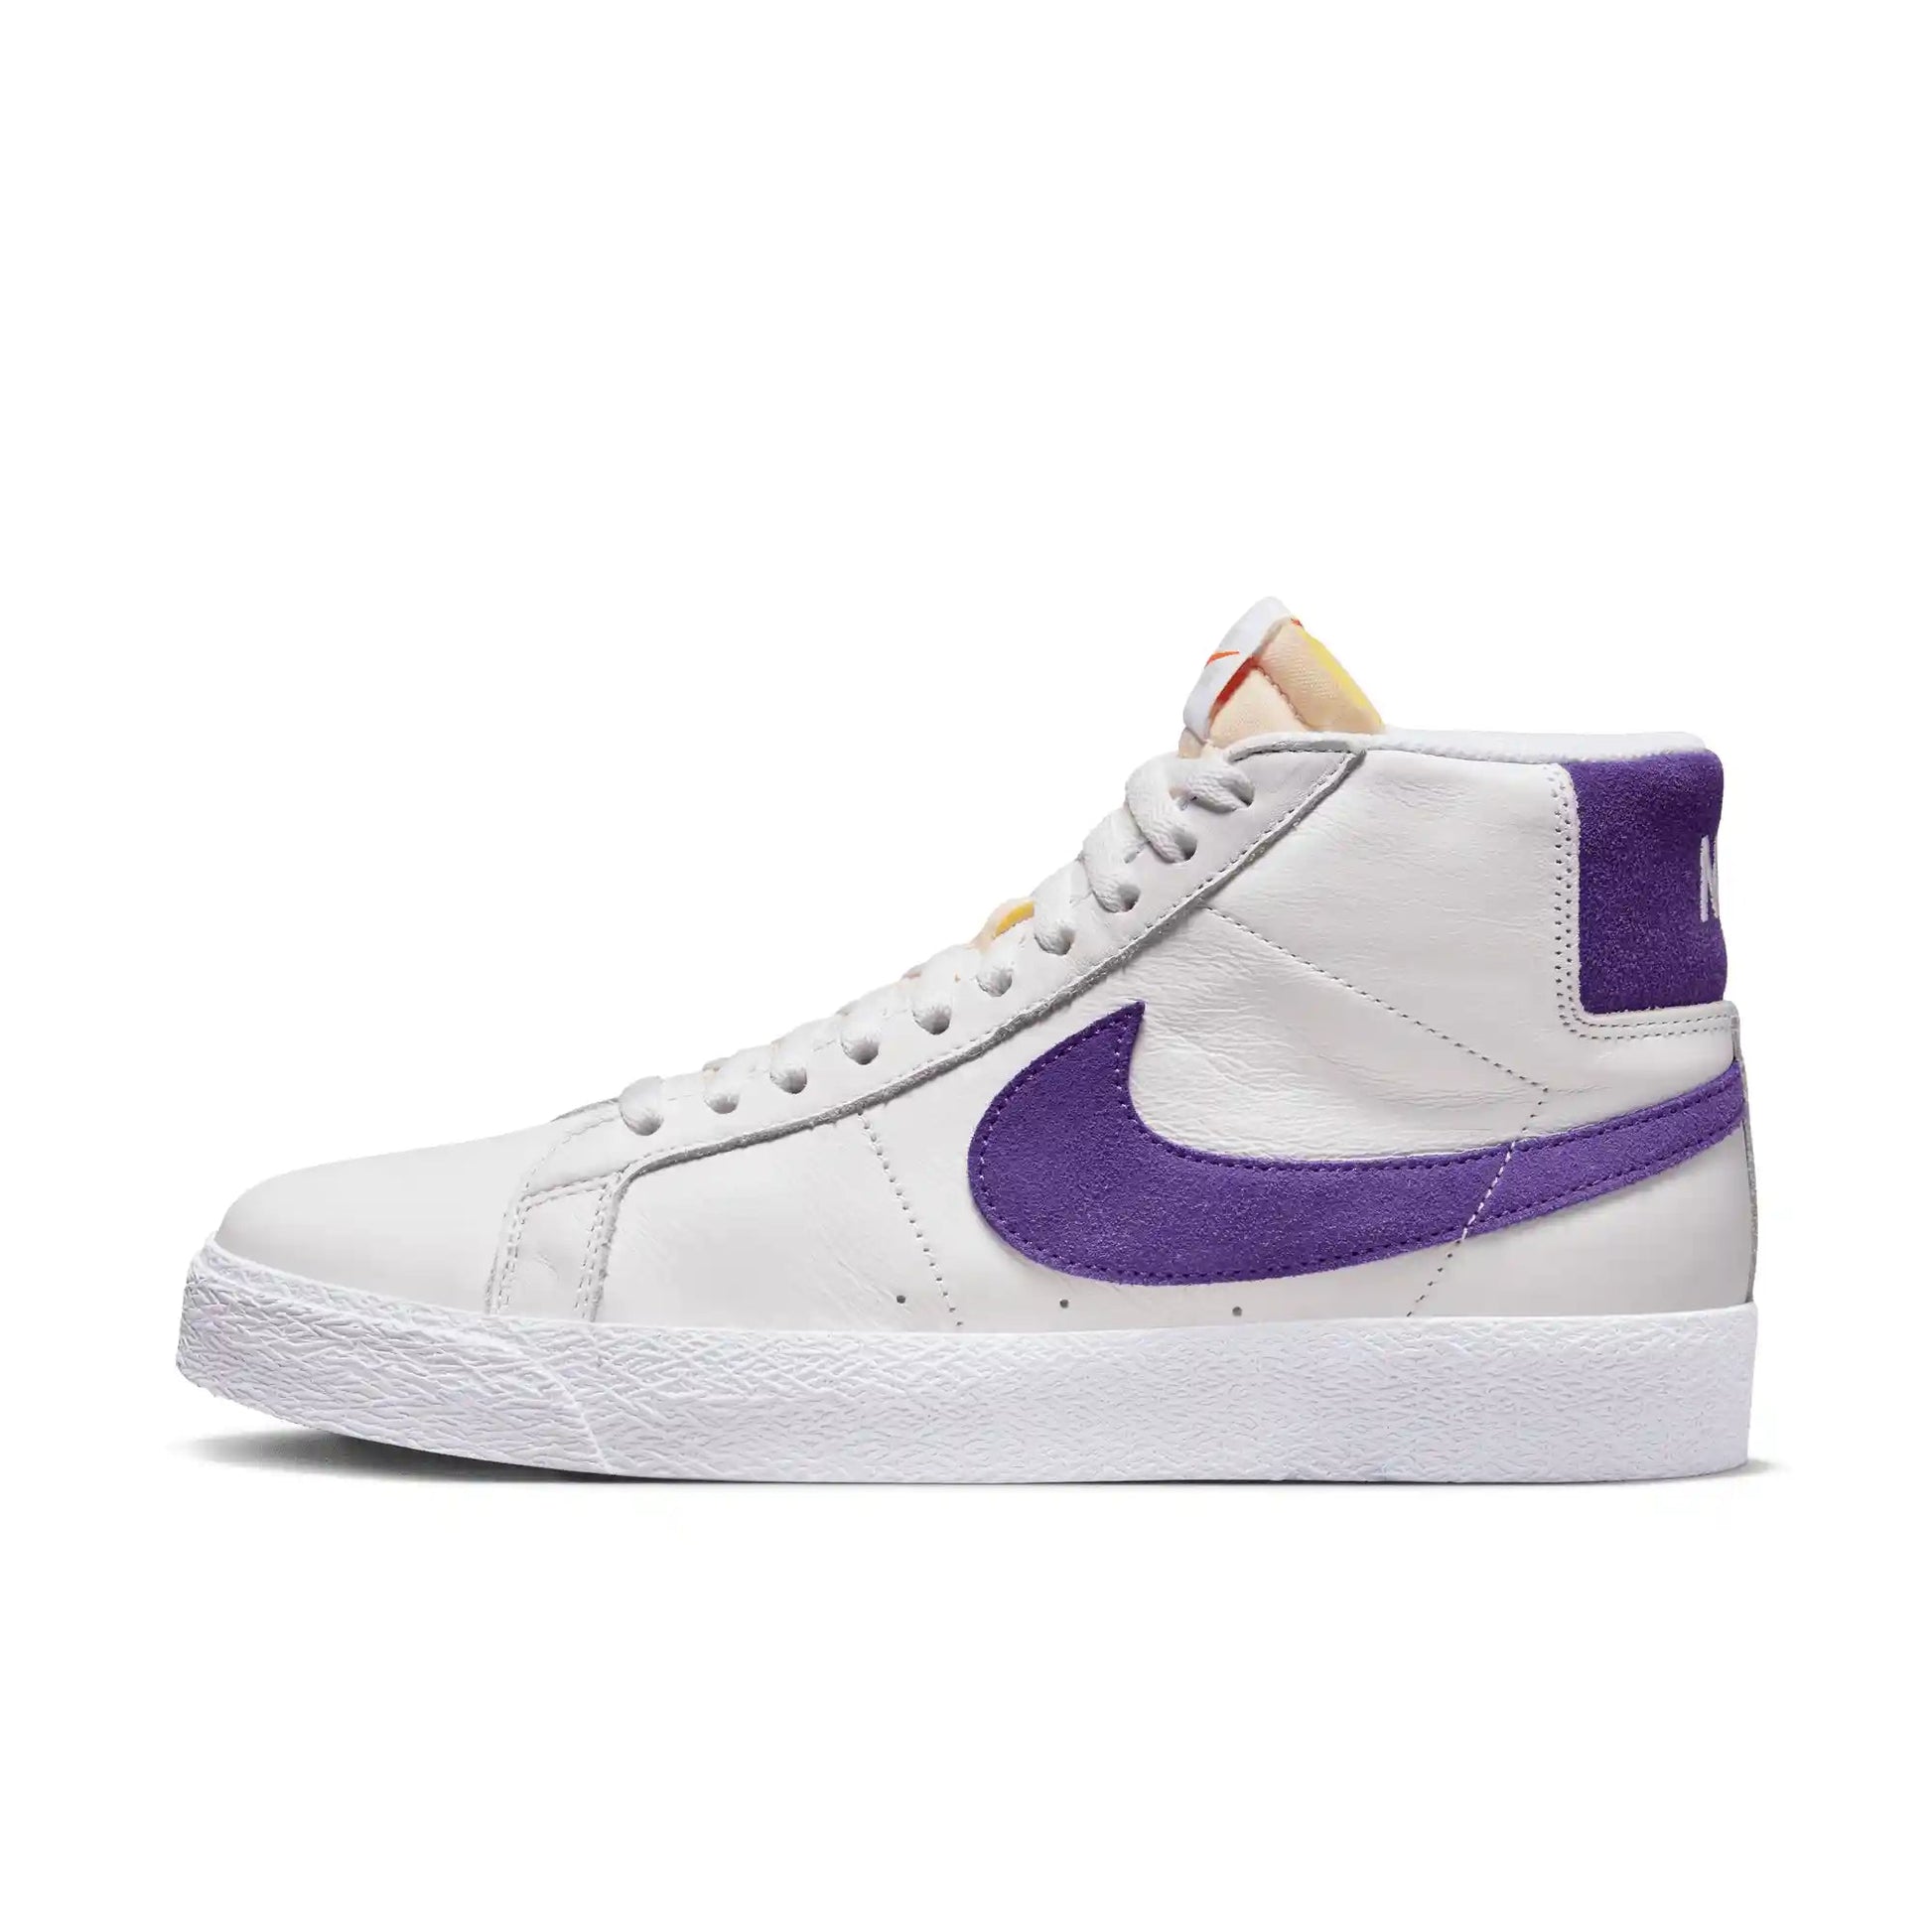 Nike SB Zoom Blazer Mid, white/court purple-white-gum light brown - Tiki Room Skateboards - 6